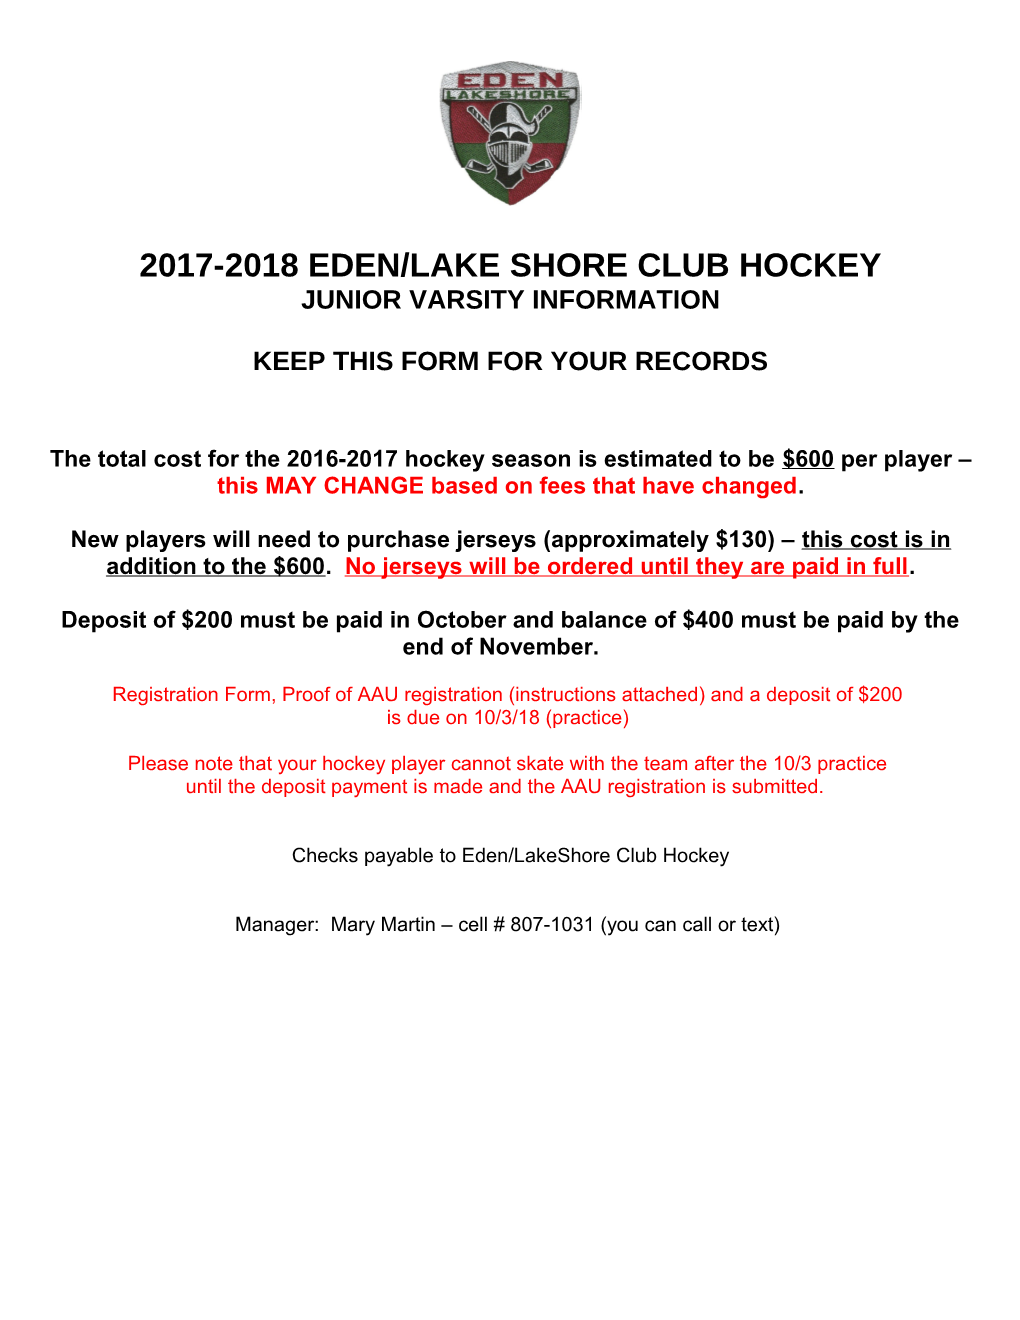 2010-2011 Eden/Lakeshore Club Hockey